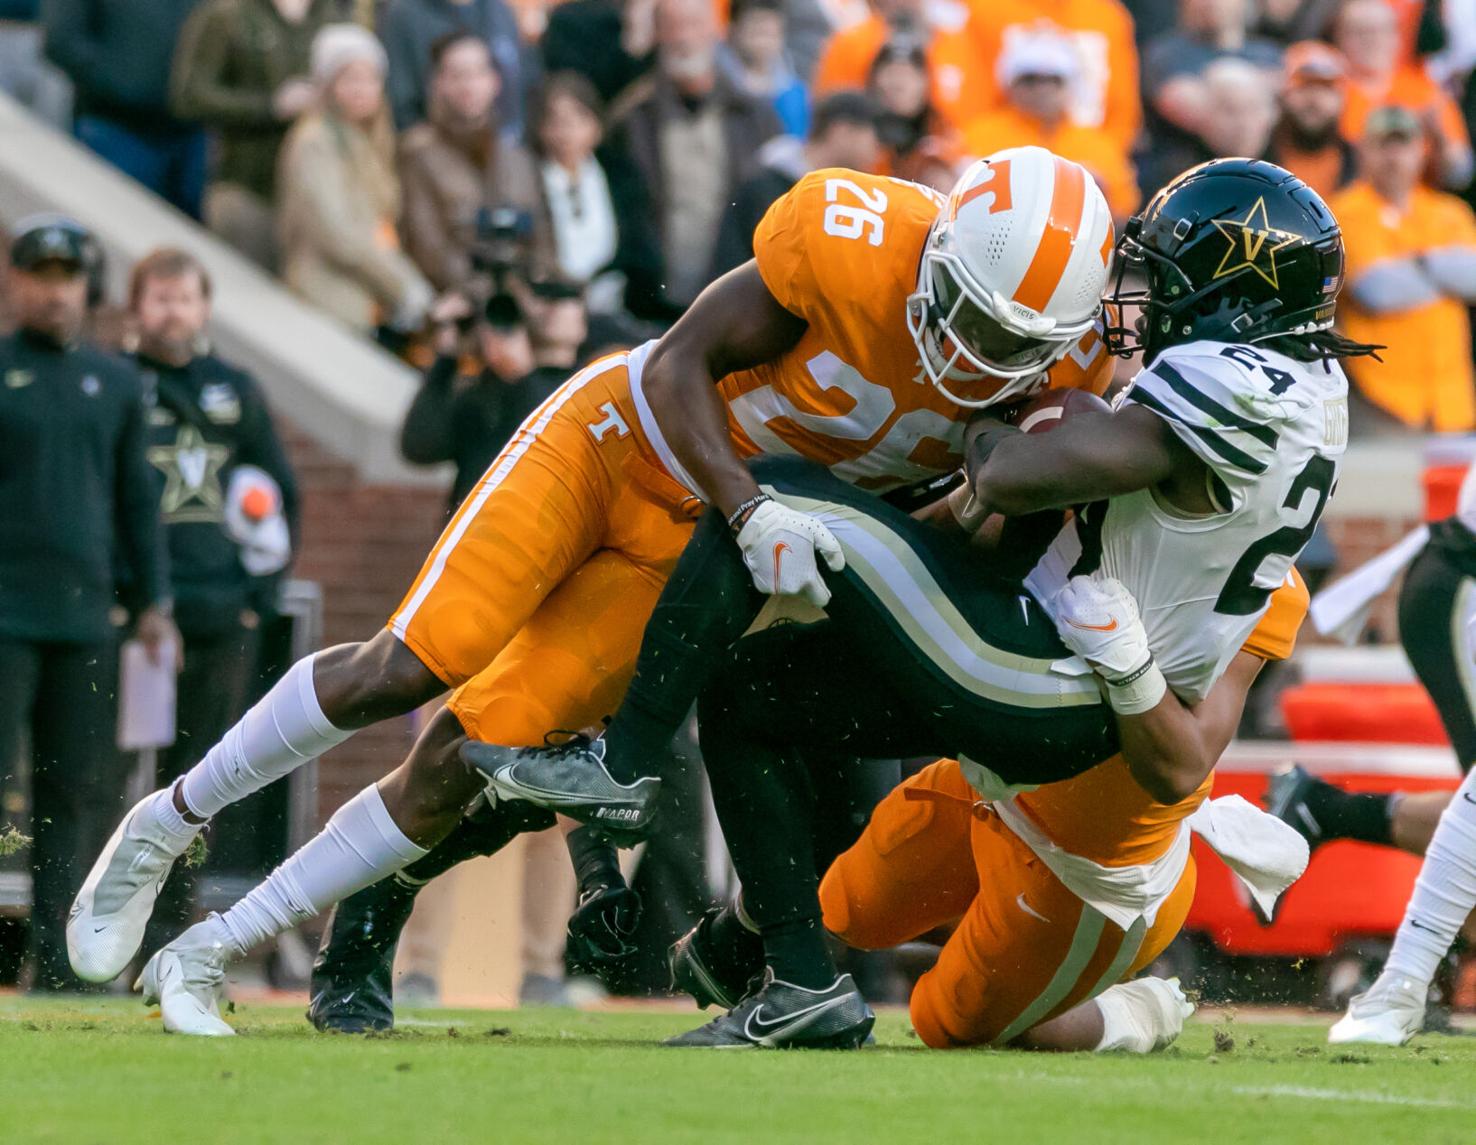 Jackson’s pick6 powers Vols past Vanderbilt Football